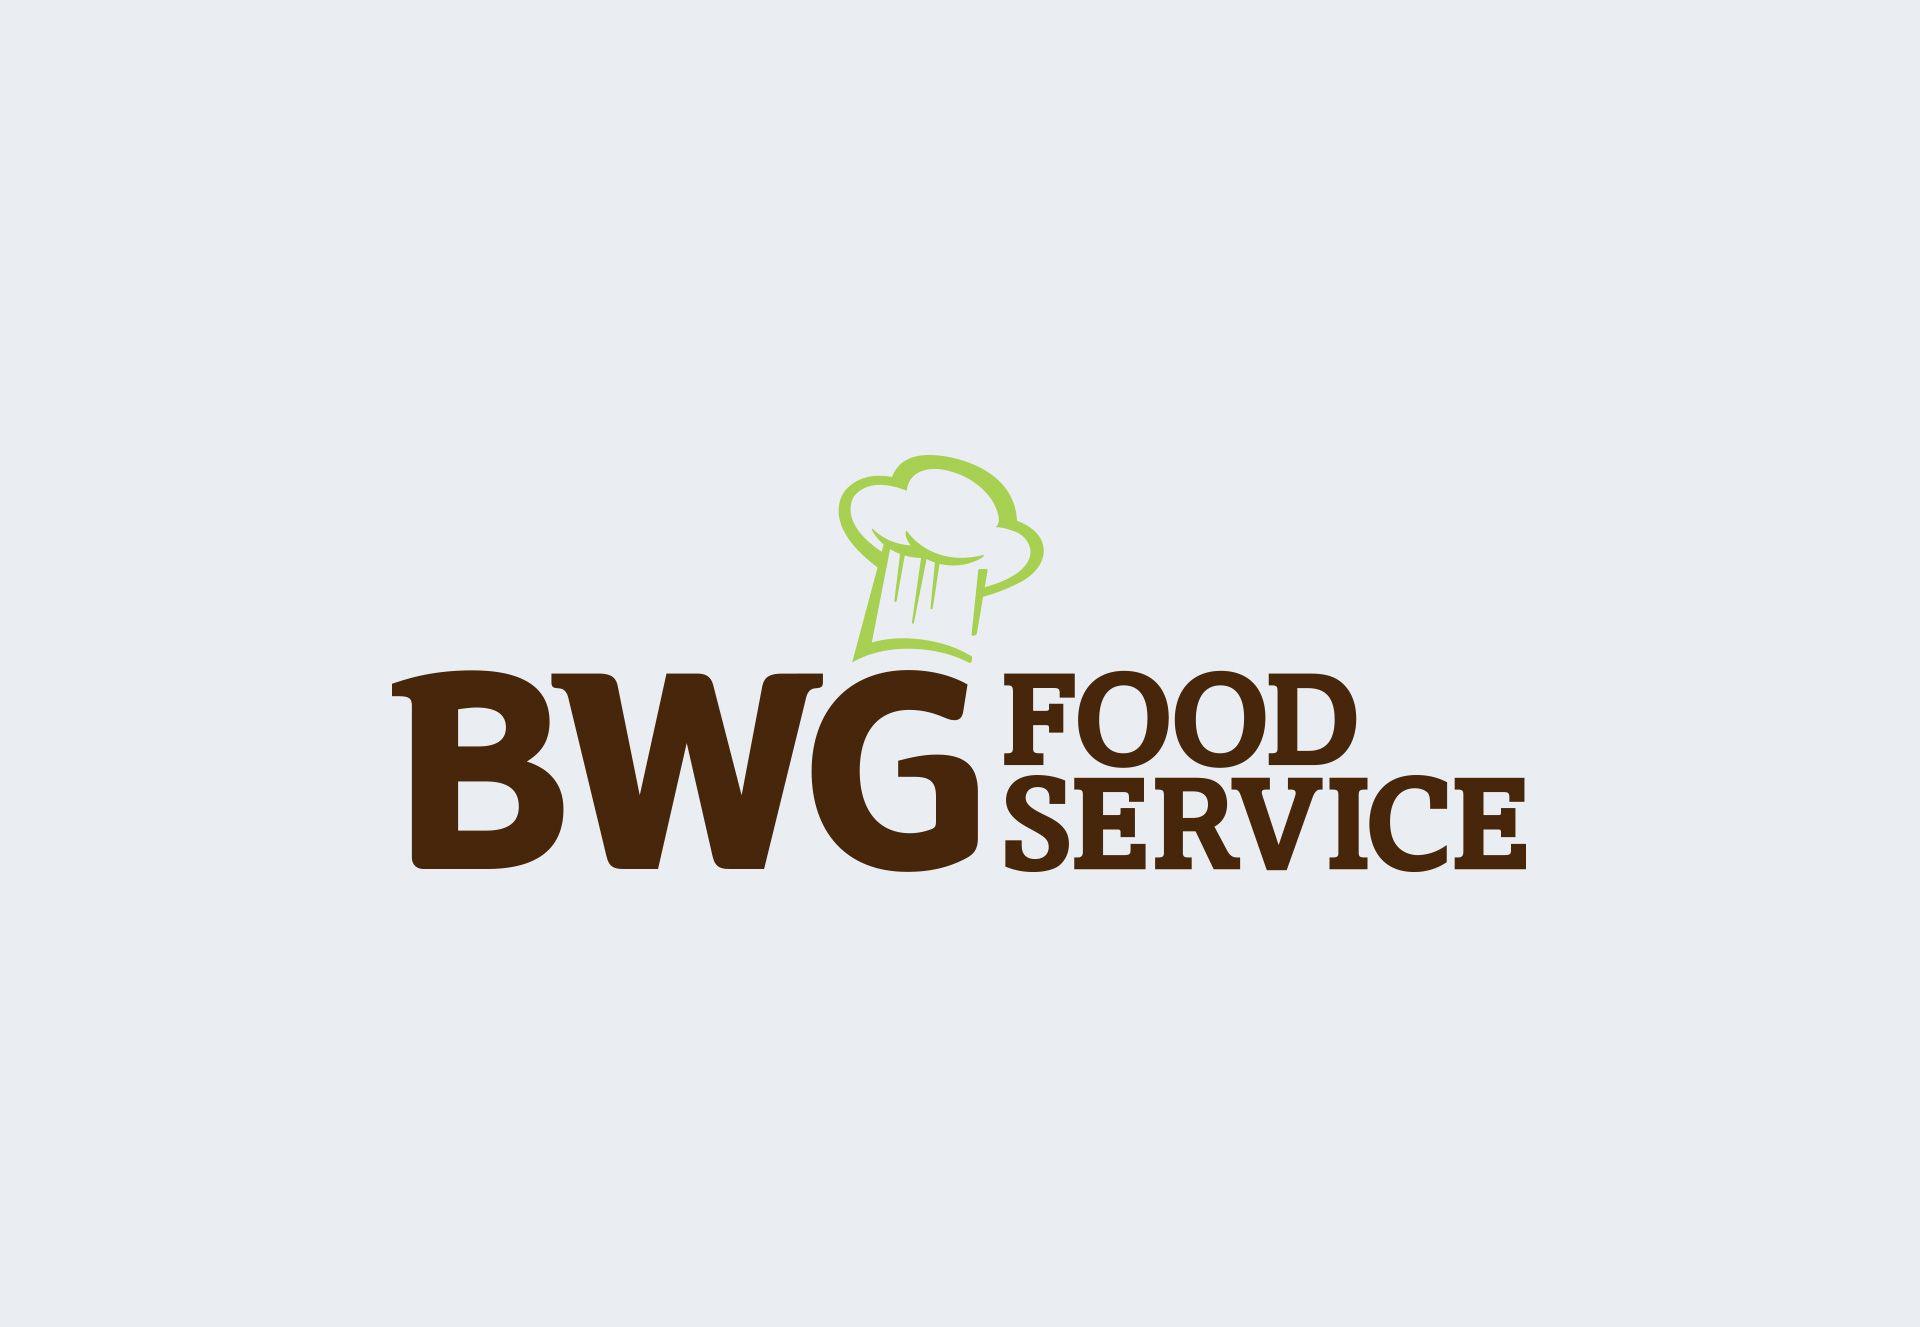 BWG Logo - BWG Foodservice is established �